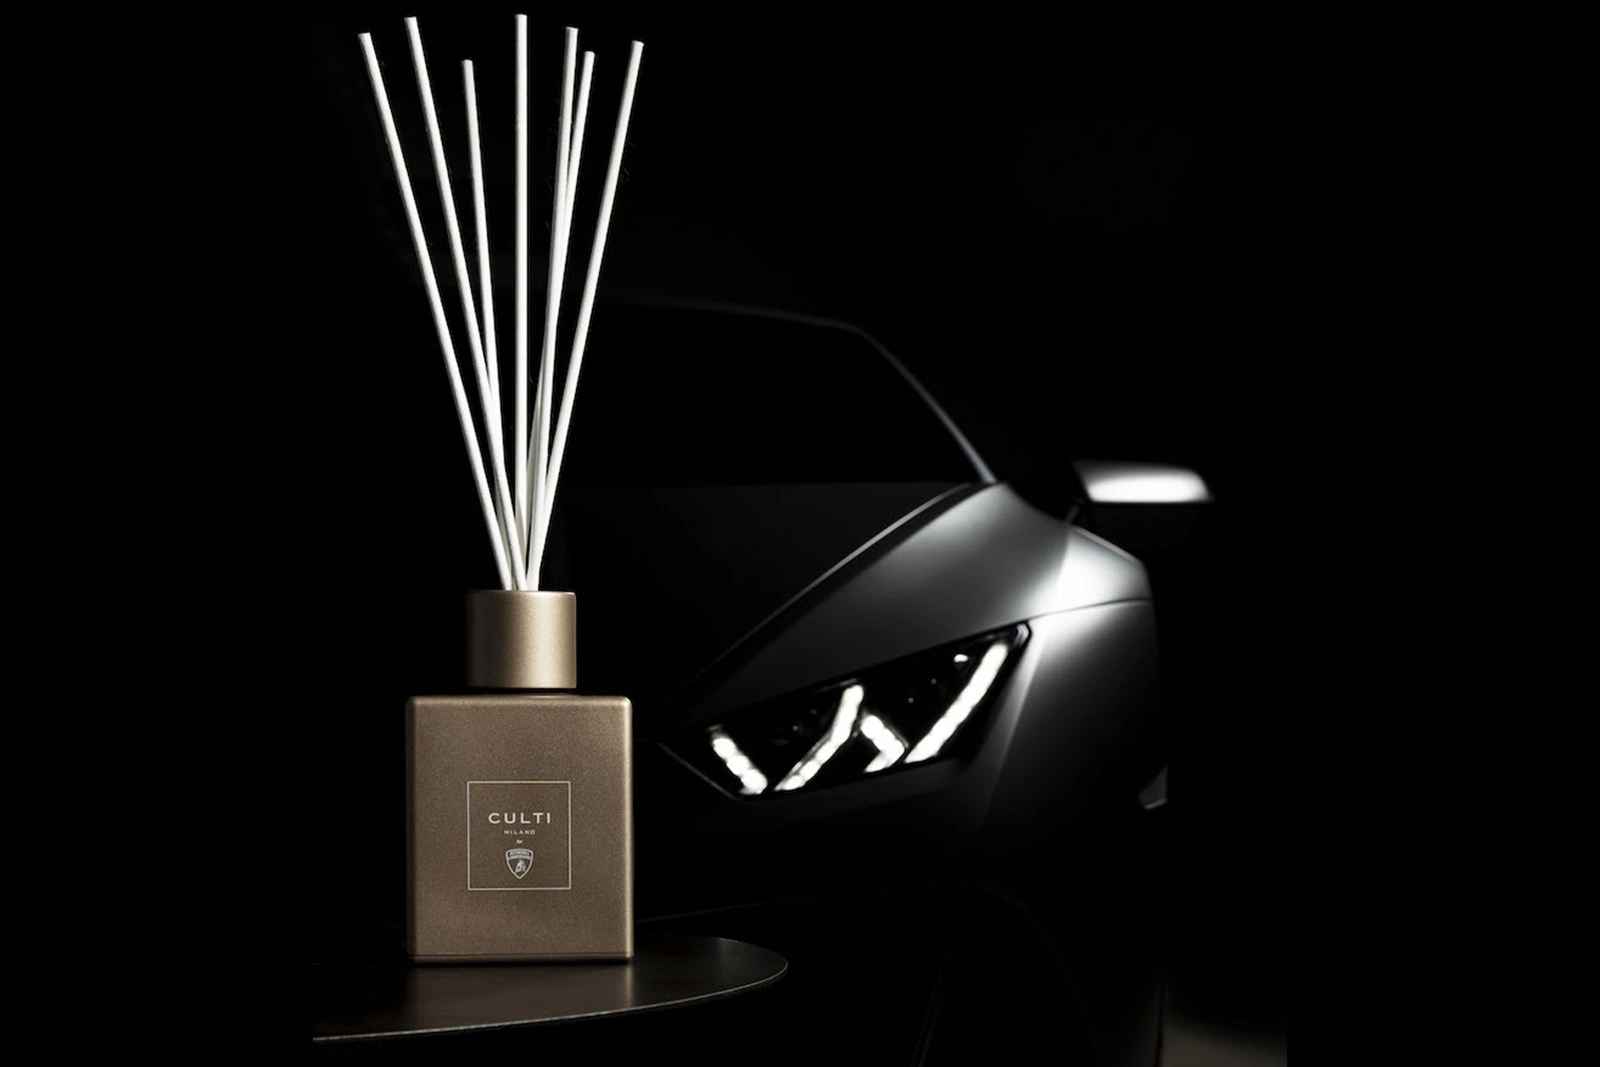 Culti Milano Automobili Lamborghini | Home Parfum 2700 ml